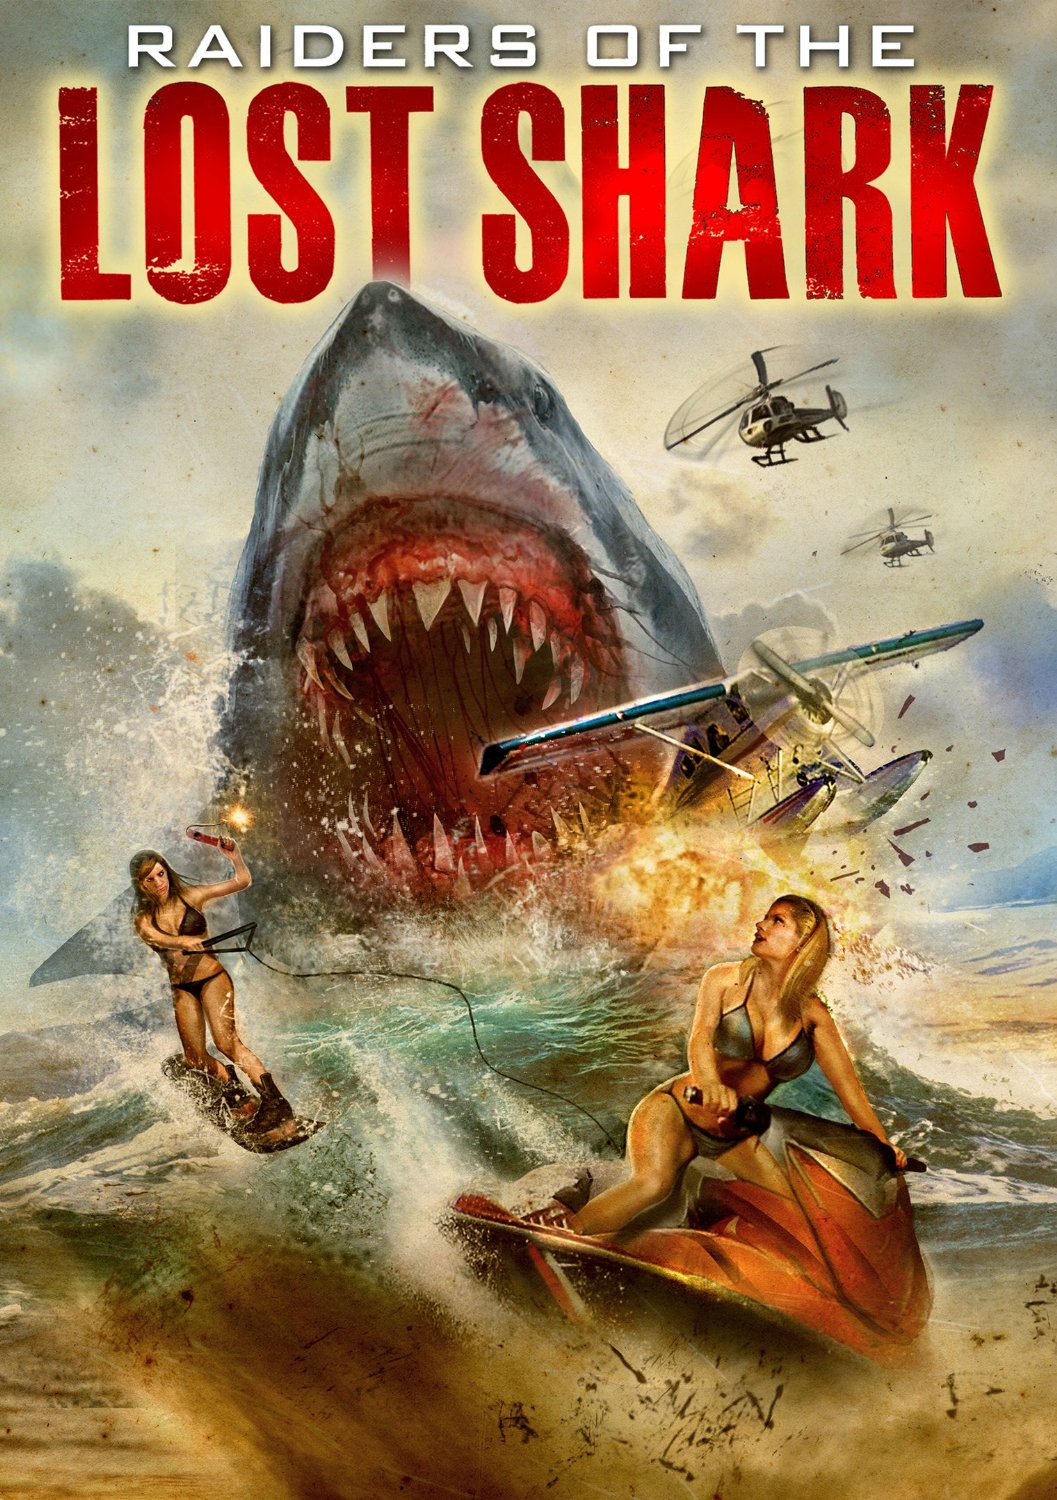 The Last Shark #1